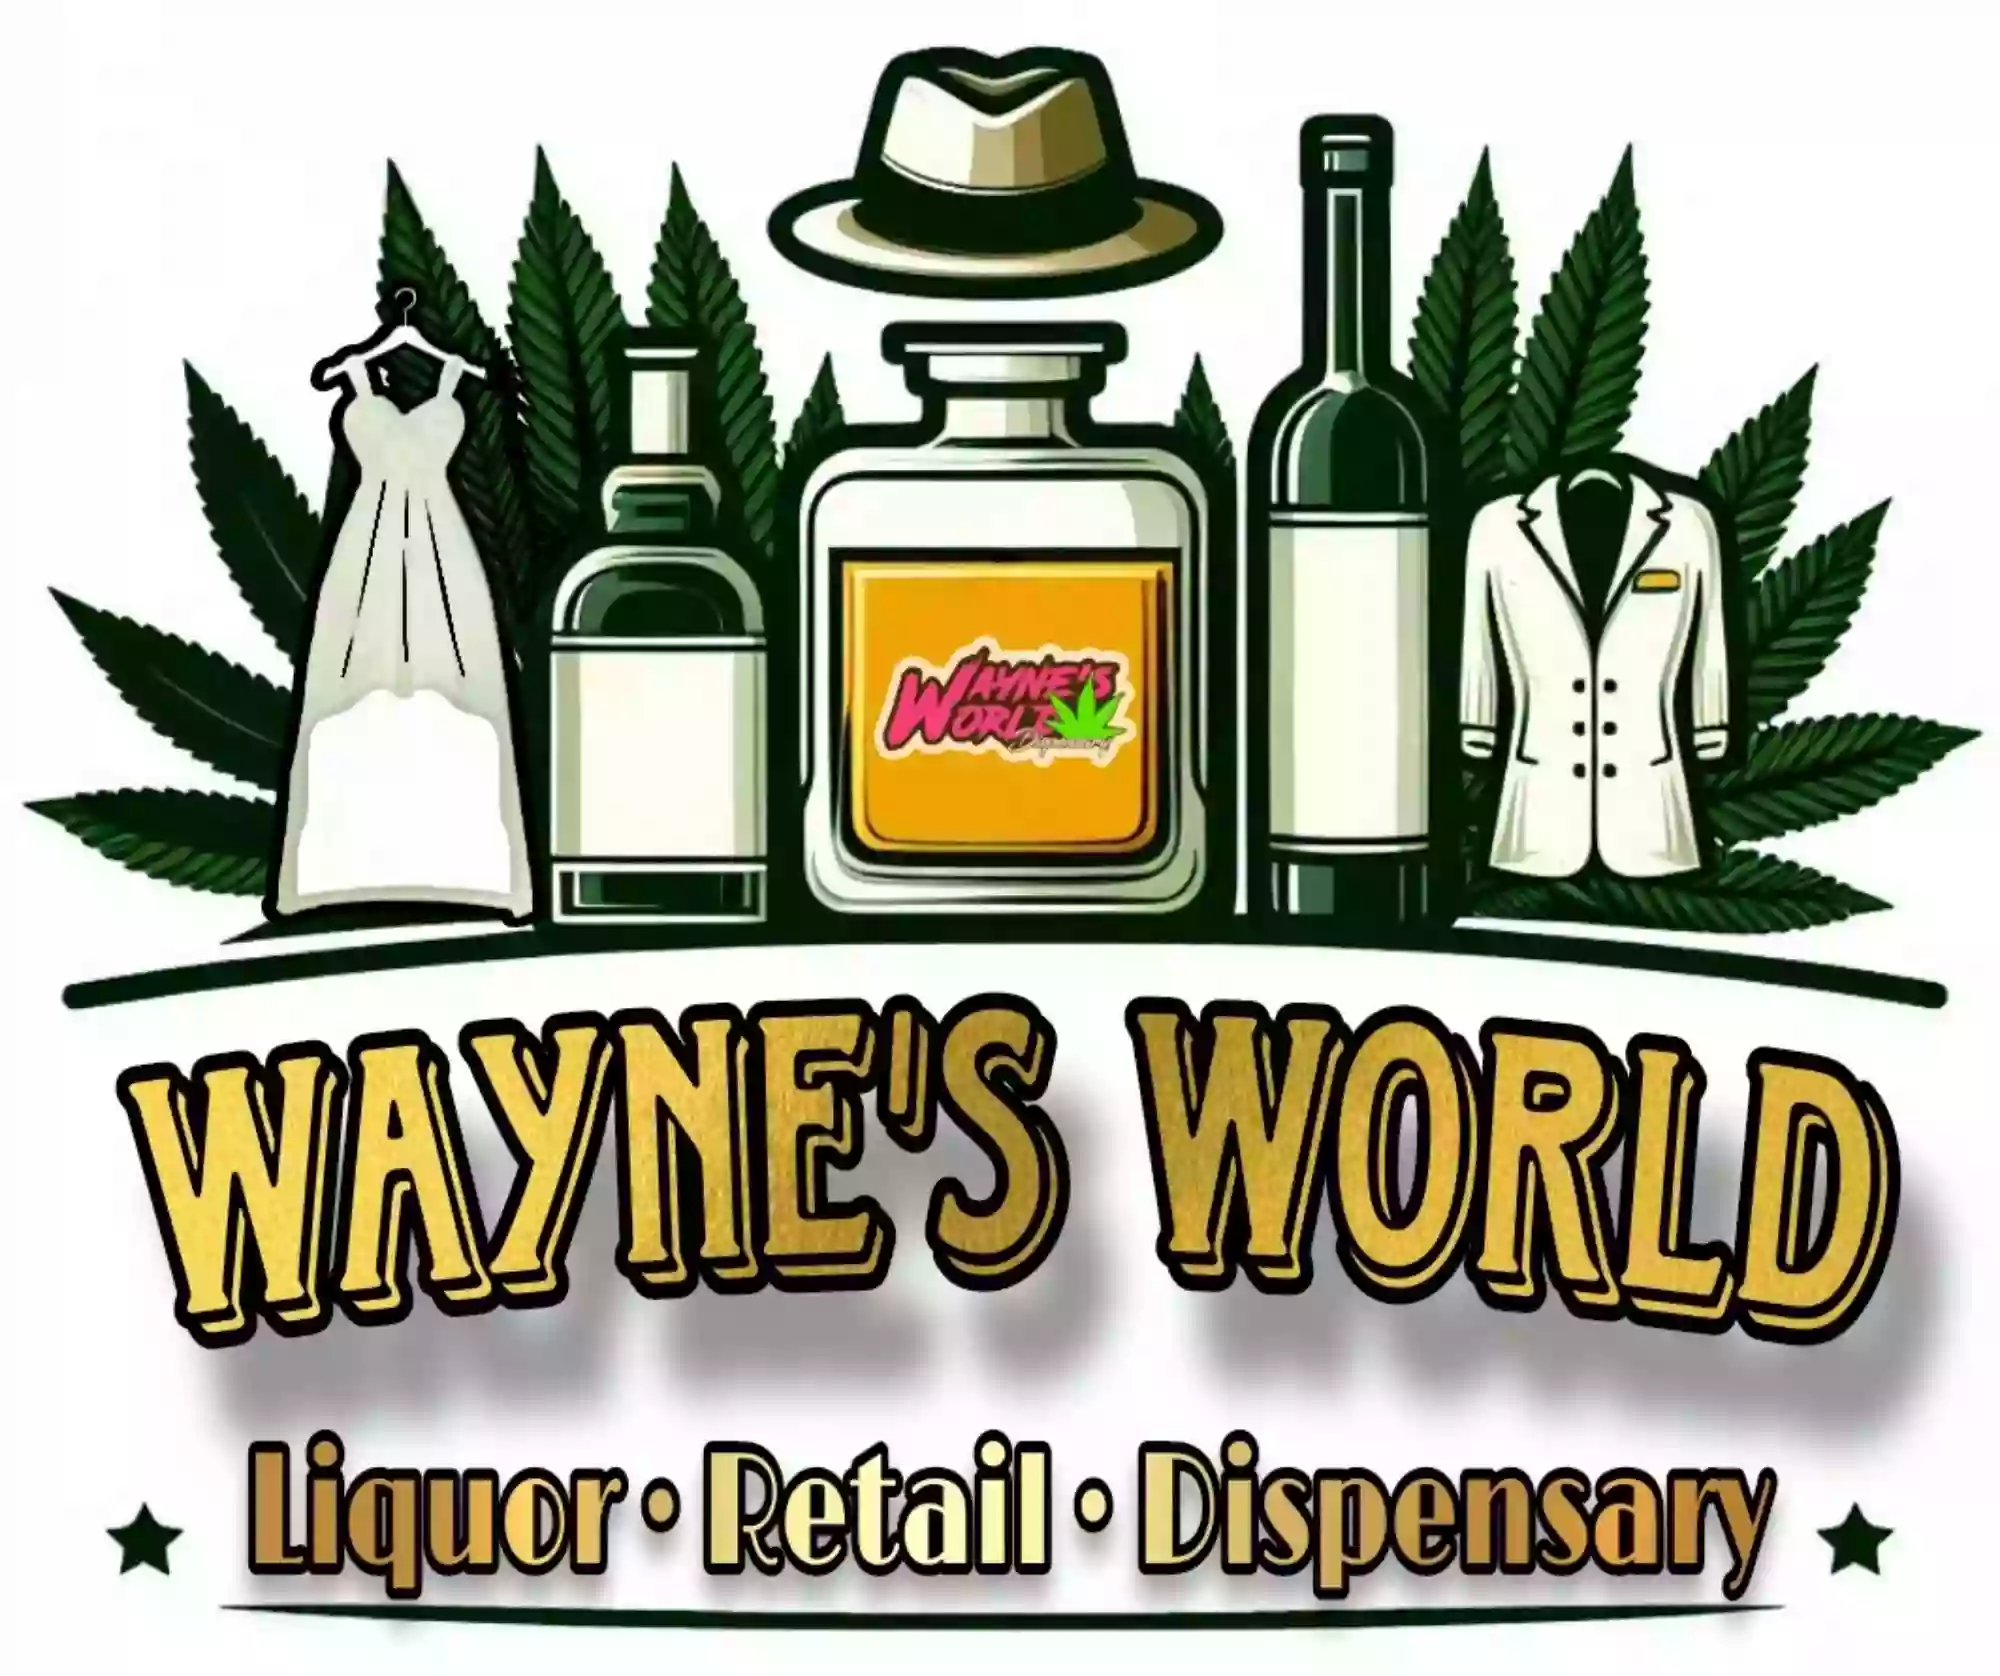 Wayne's World Dispensary